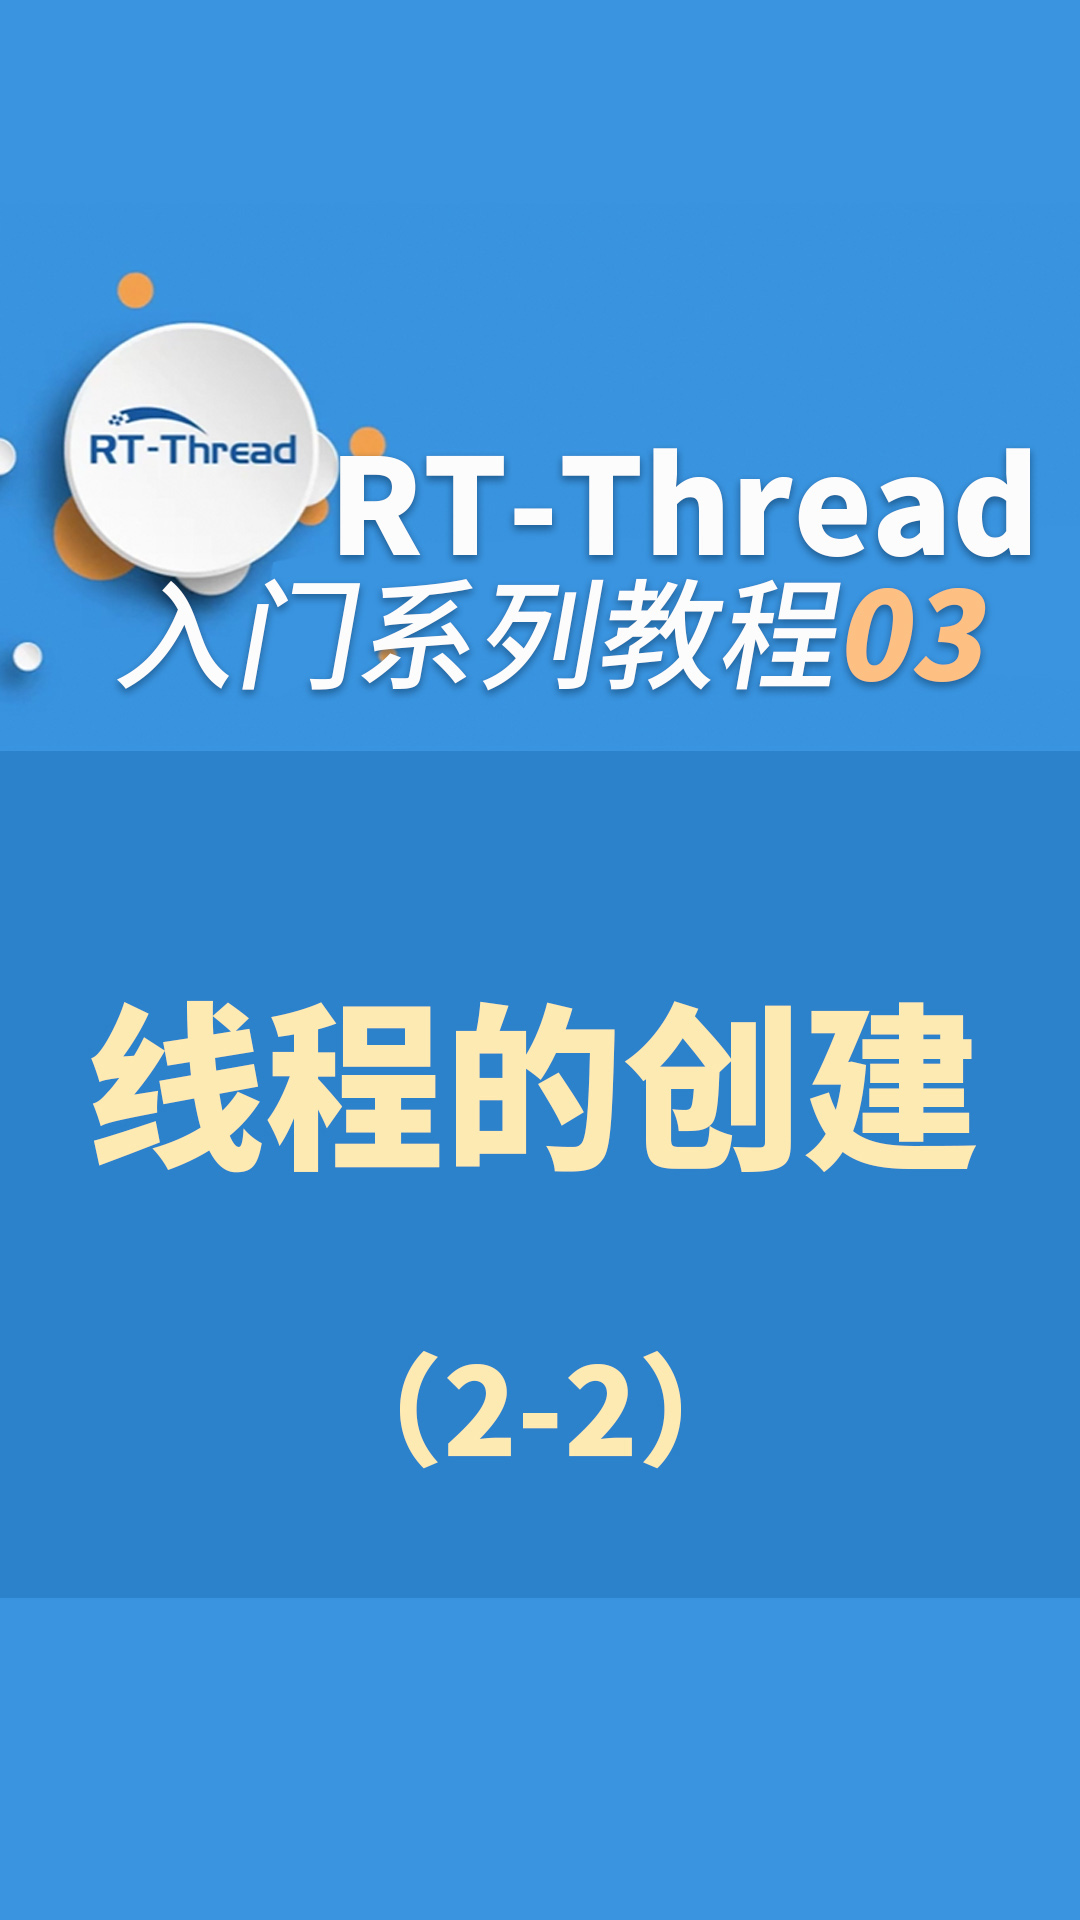  RT-Thread内核入门指南 - 3-3-线程的创建2-2#嵌入式开发 